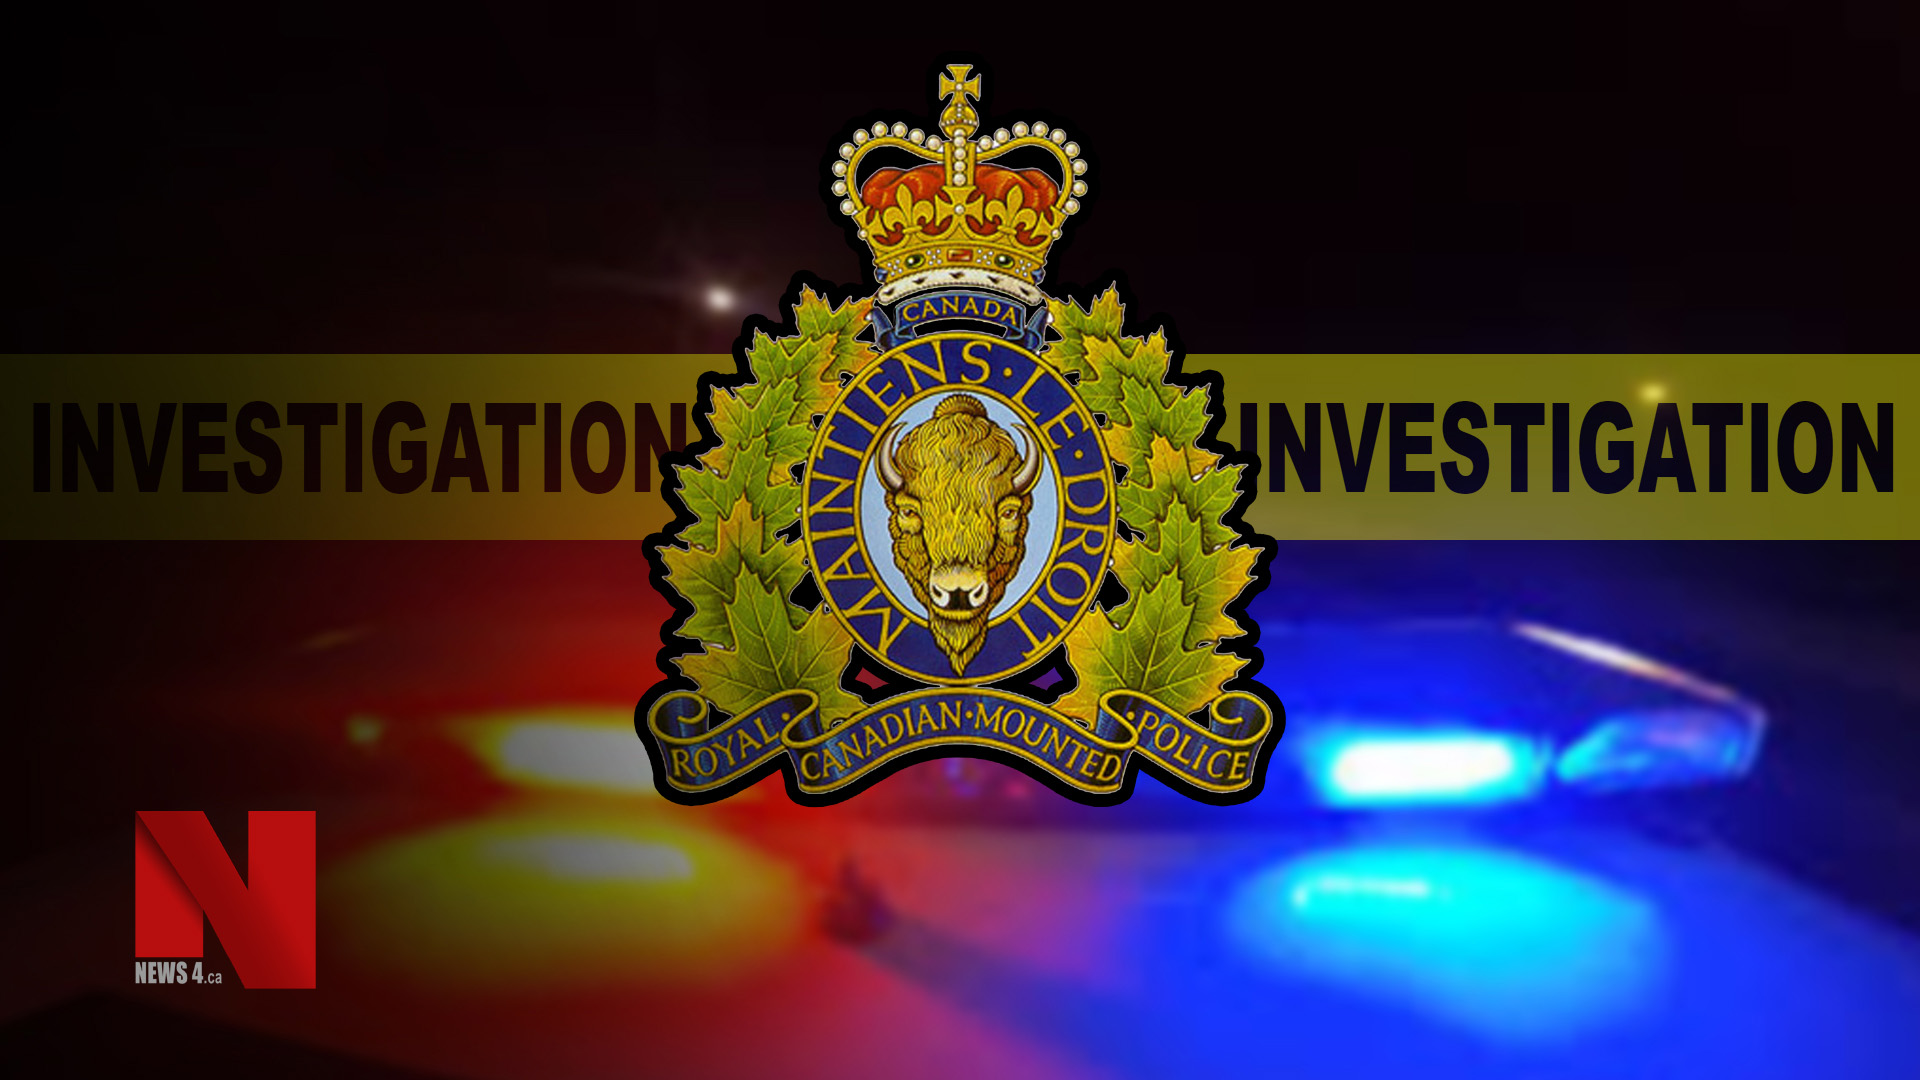 RCMP Investigation